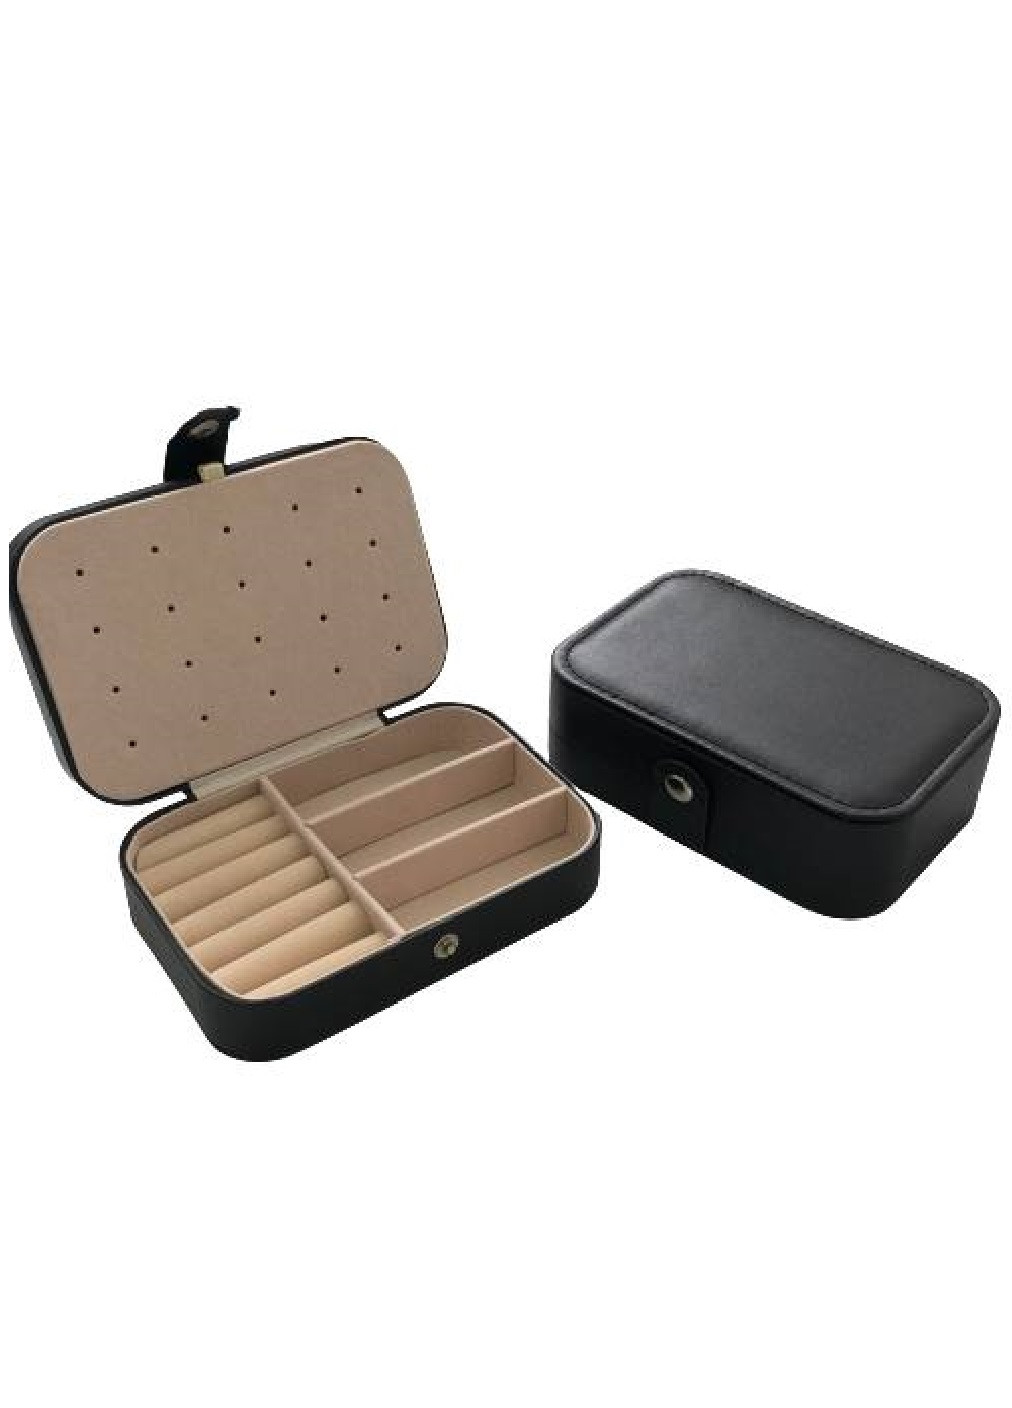 Шкатулка сундук органайзер коробка футляр для хранения украшений бижутерии 16х11.5х5 см (474647-Prob) Черная Unbranded (259203517)